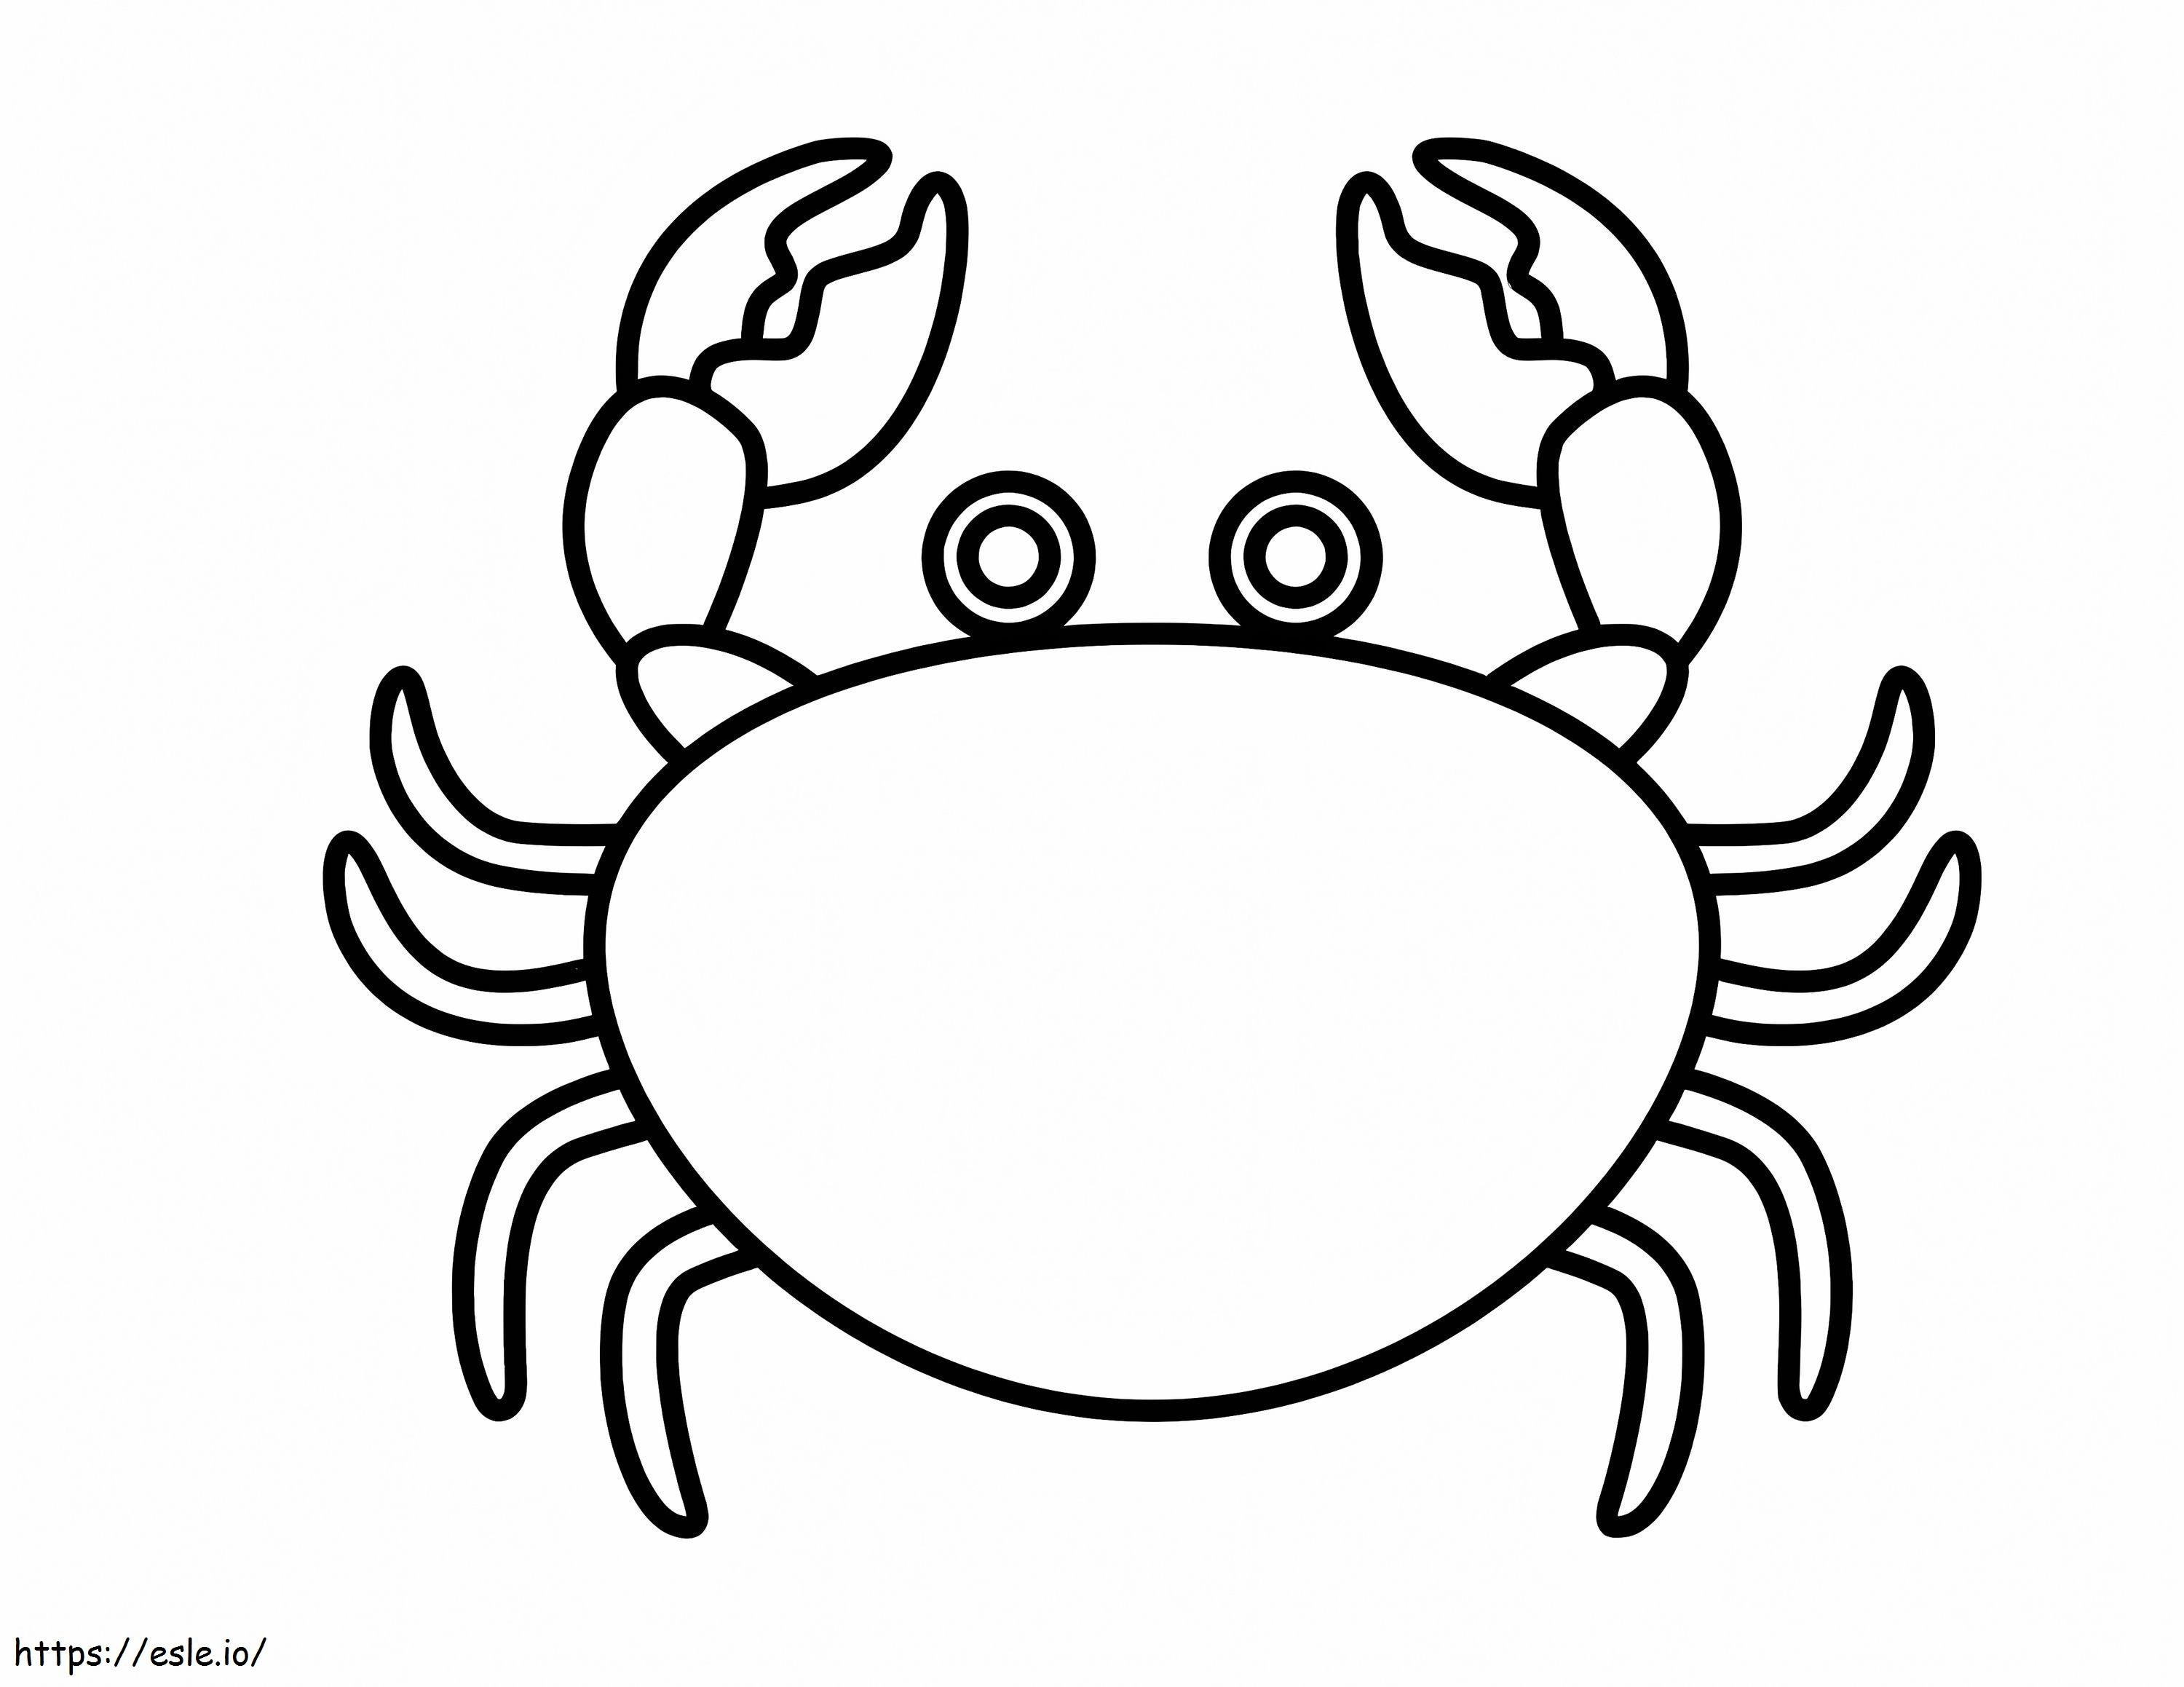 Coloriage Crabe facile à imprimer dessin